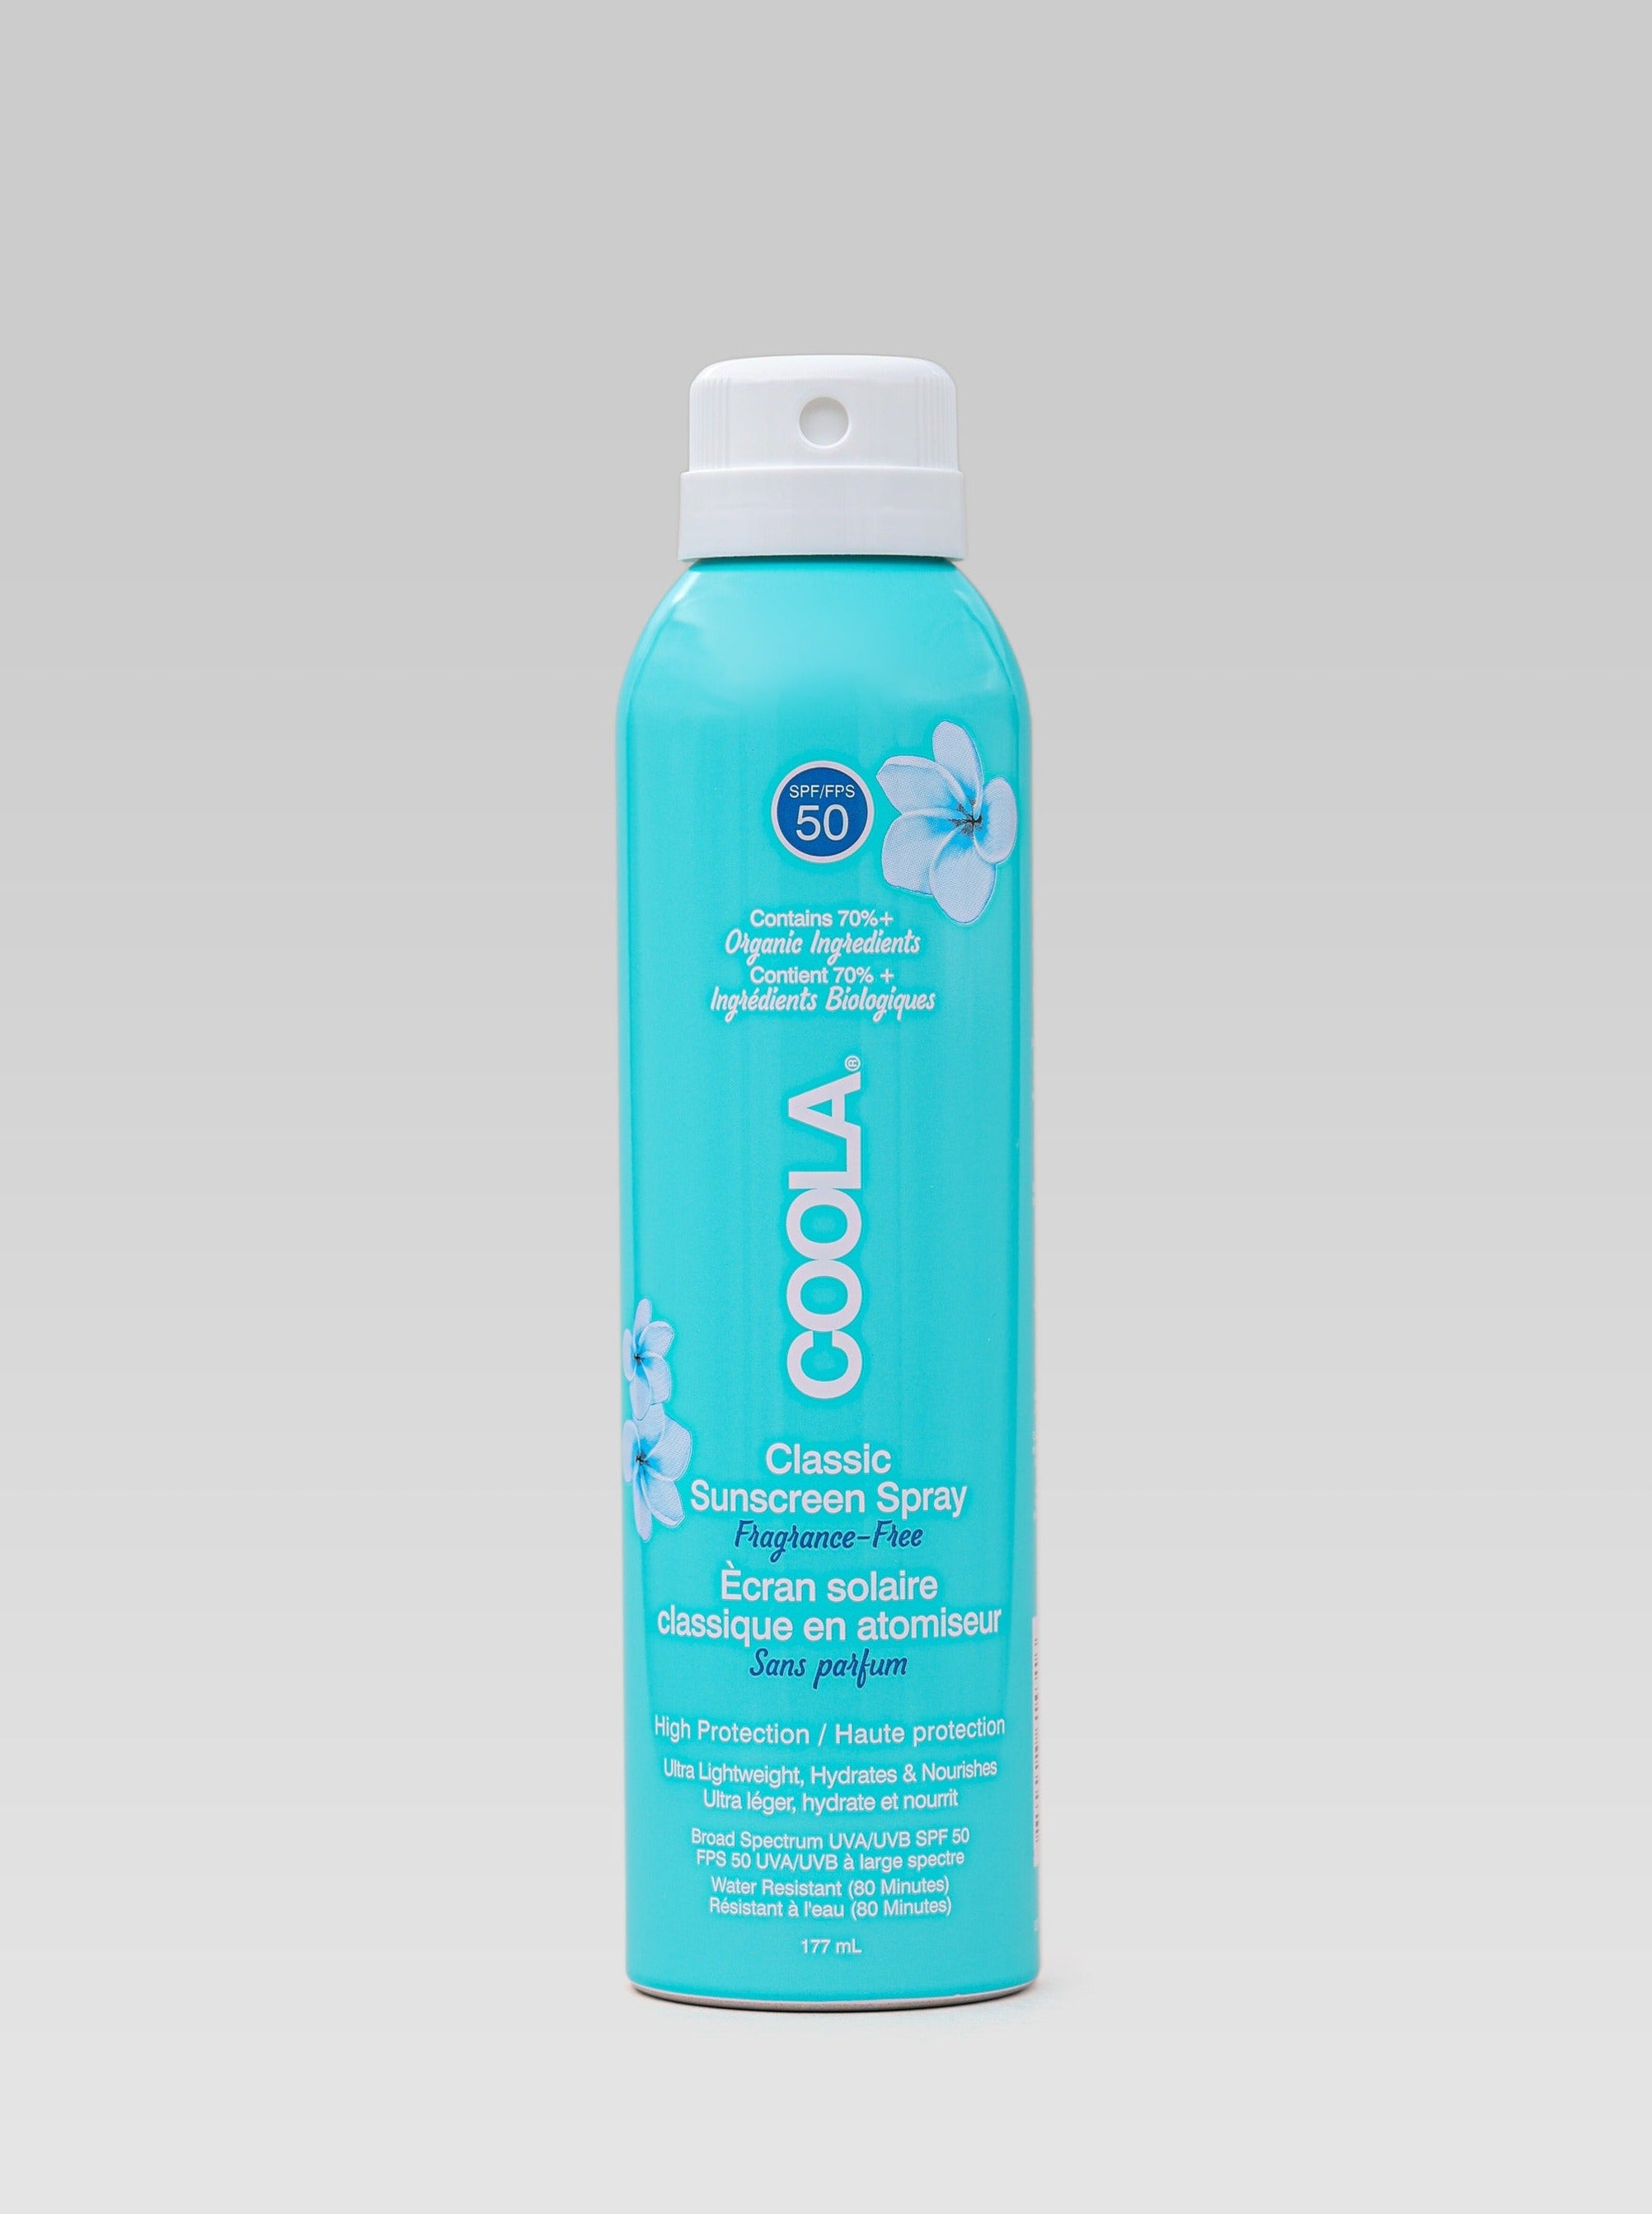 COOLA Classic Body Organic Sunscreen Spray SPF 50 Fragrance Free product shot